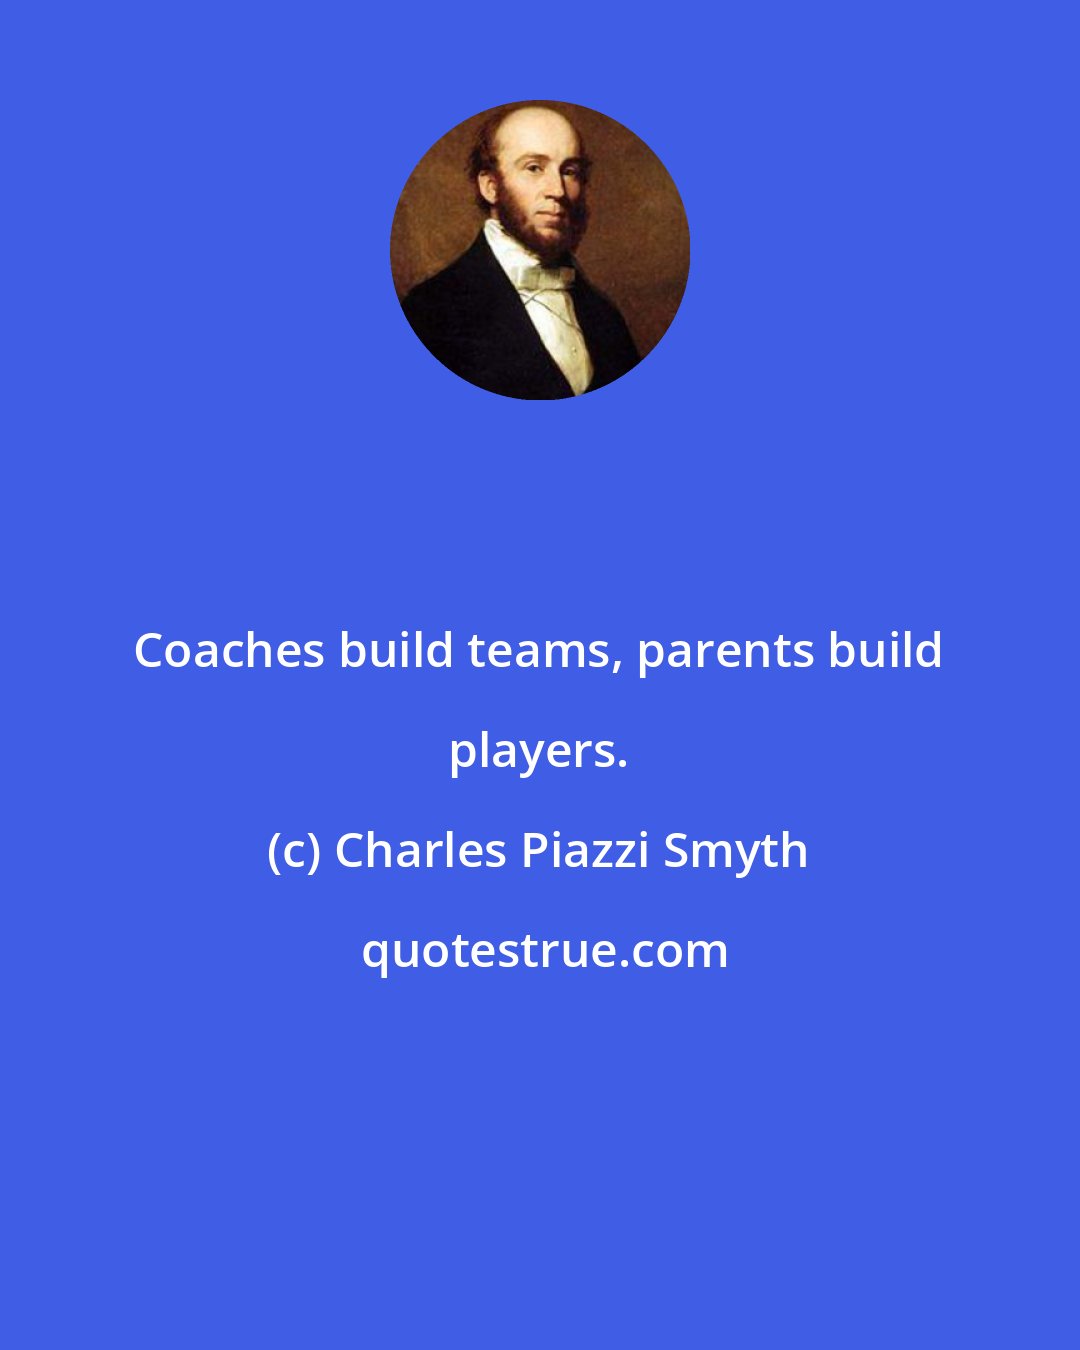 Charles Piazzi Smyth: Coaches build teams, parents build players.